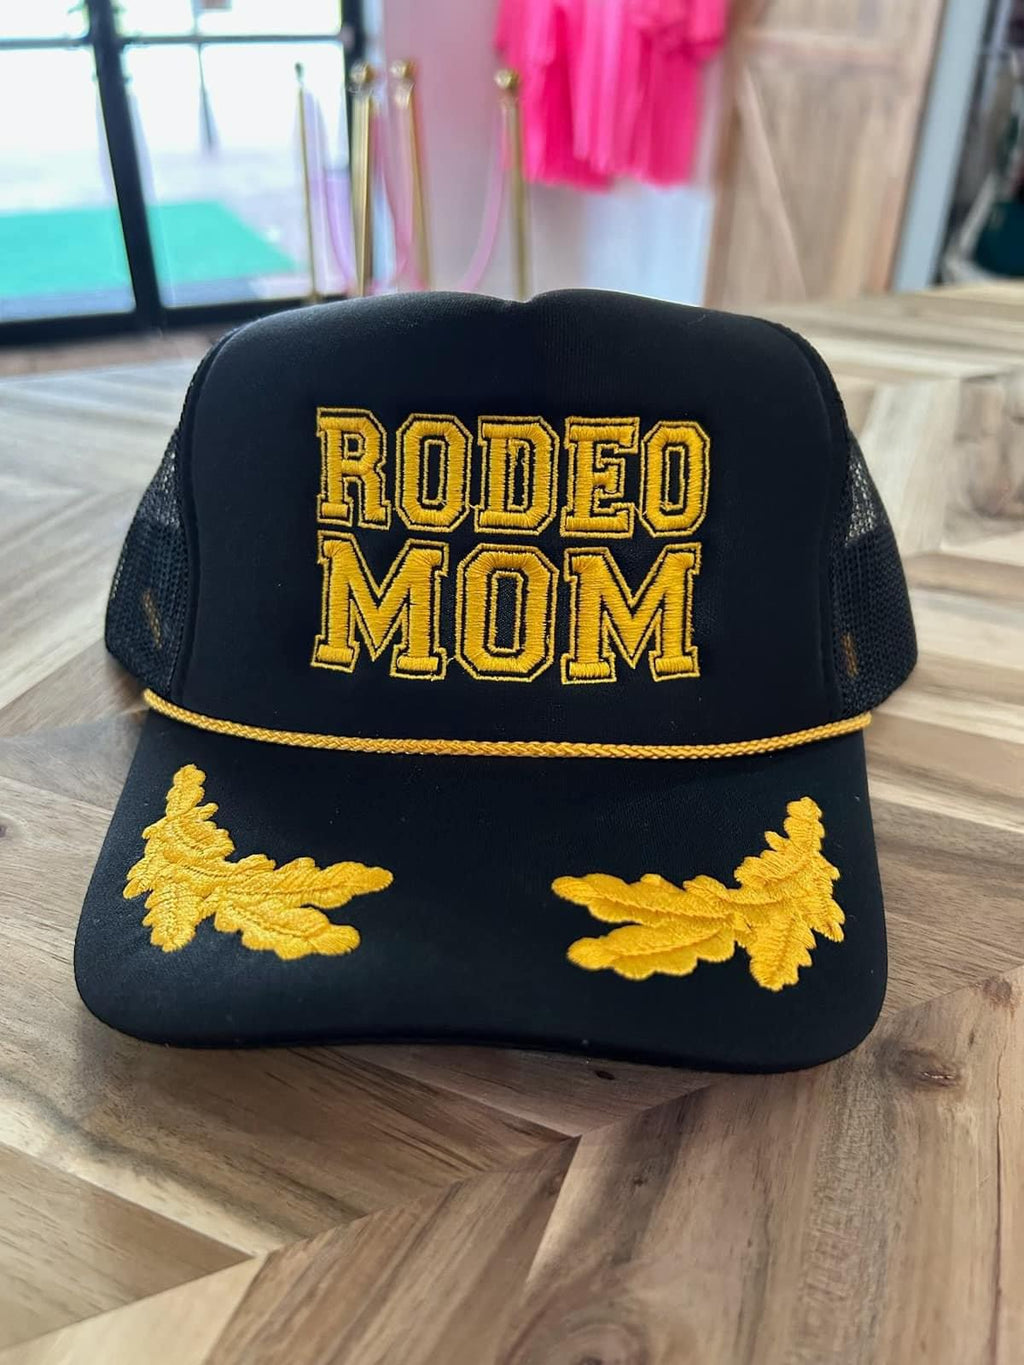 Rodeo Mom Trucker Hat